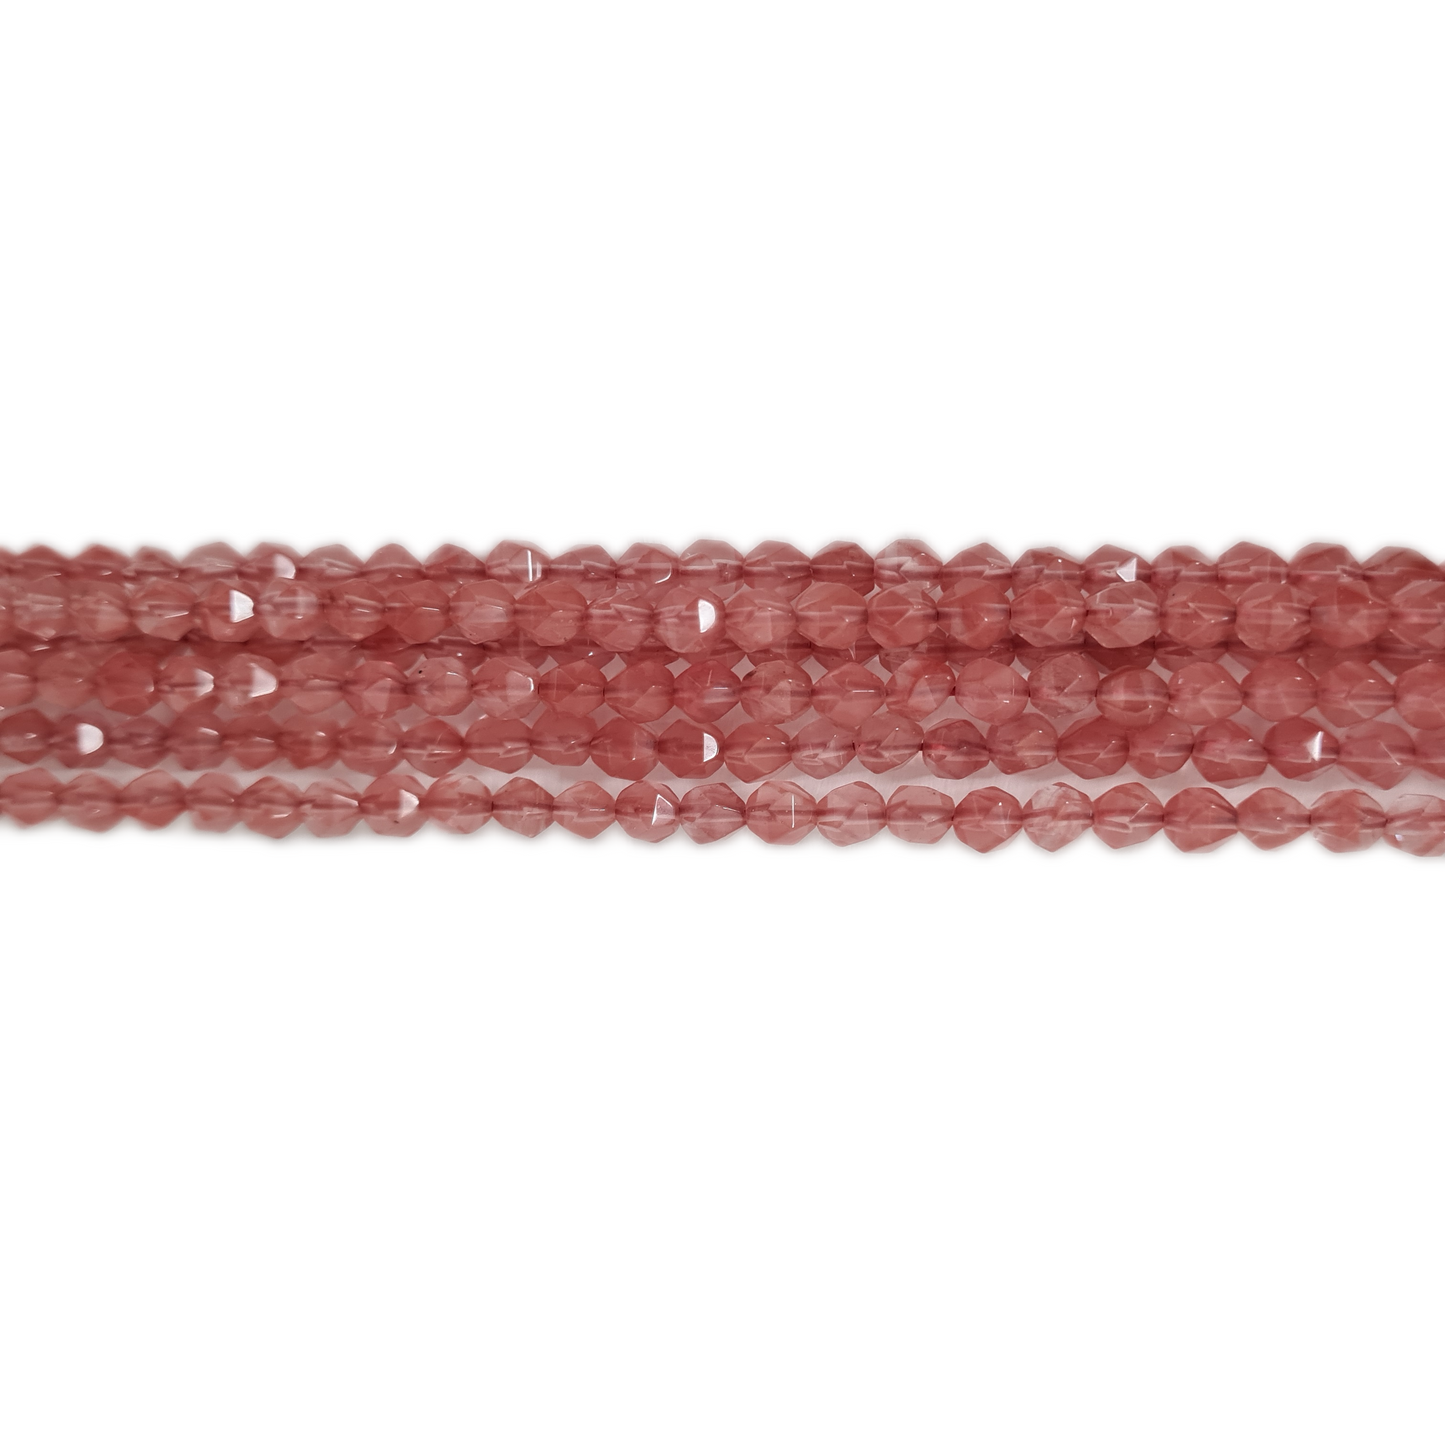 Strand of 6mm Cherry Quartz Beads